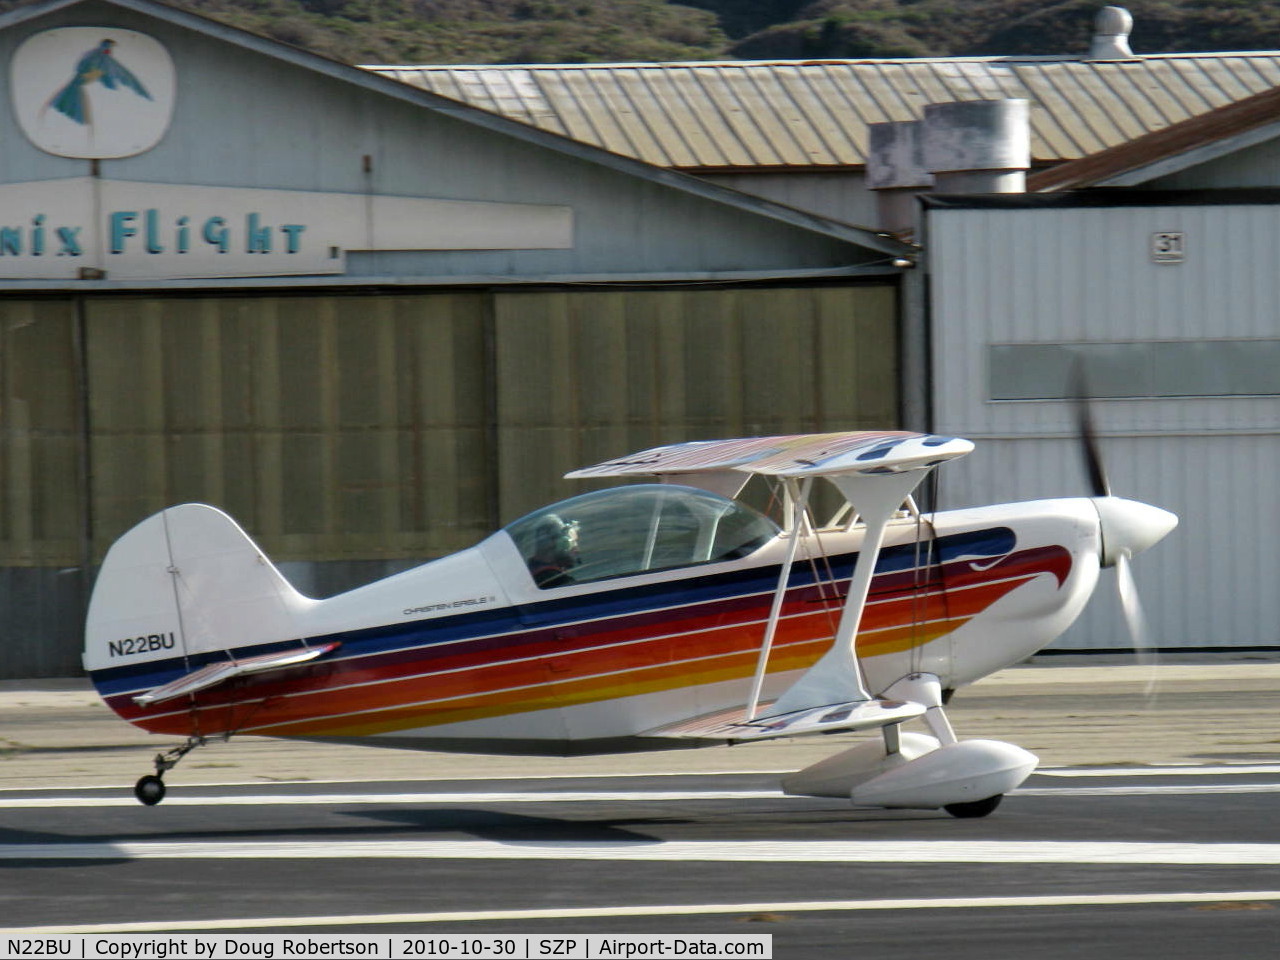 N22BU, 1987 Christen Eagle II C/N BRUNER 0001, 1987 Bruner/Ulmer CHRISTEN EAGLE II, Lycoming AEIO-360 180 Hp aerobatic, takeoff roll Rwy 22